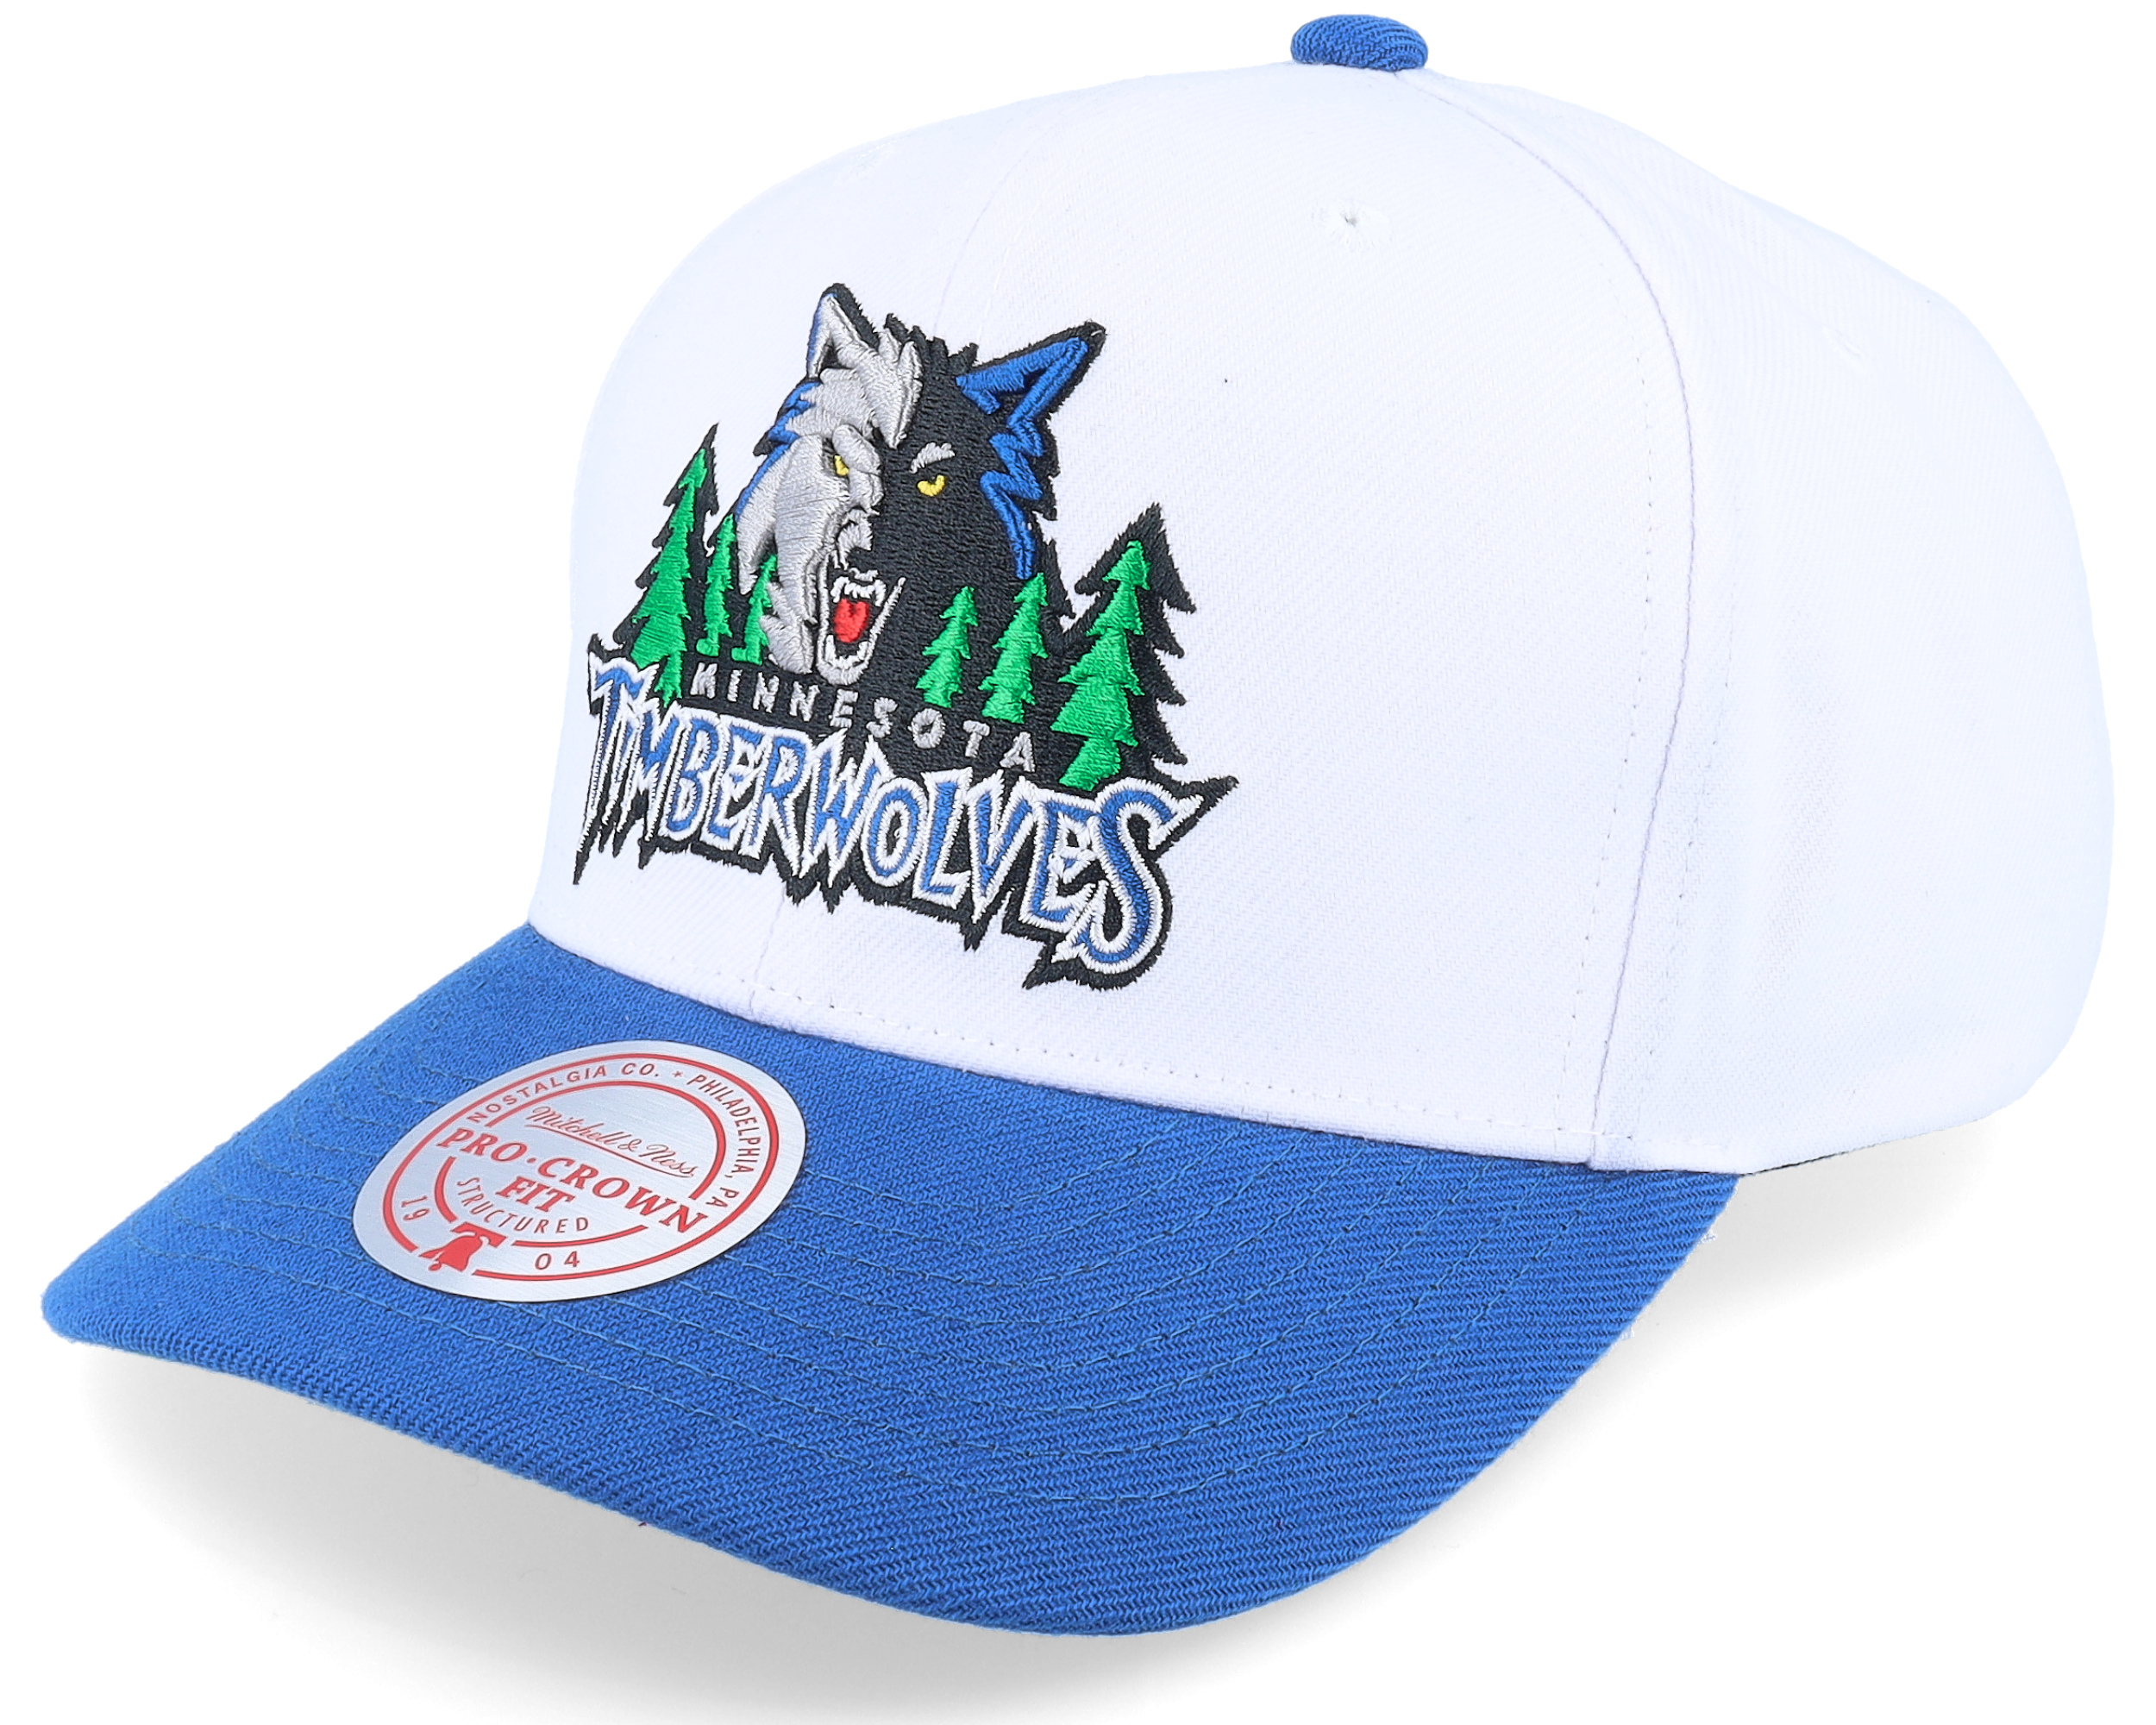 Mitchell & Ness Minnesota Timberwolves Team Two Tone 2.0 Blue Snapback Hat, MITCHELL & NESS HATS, CAPS